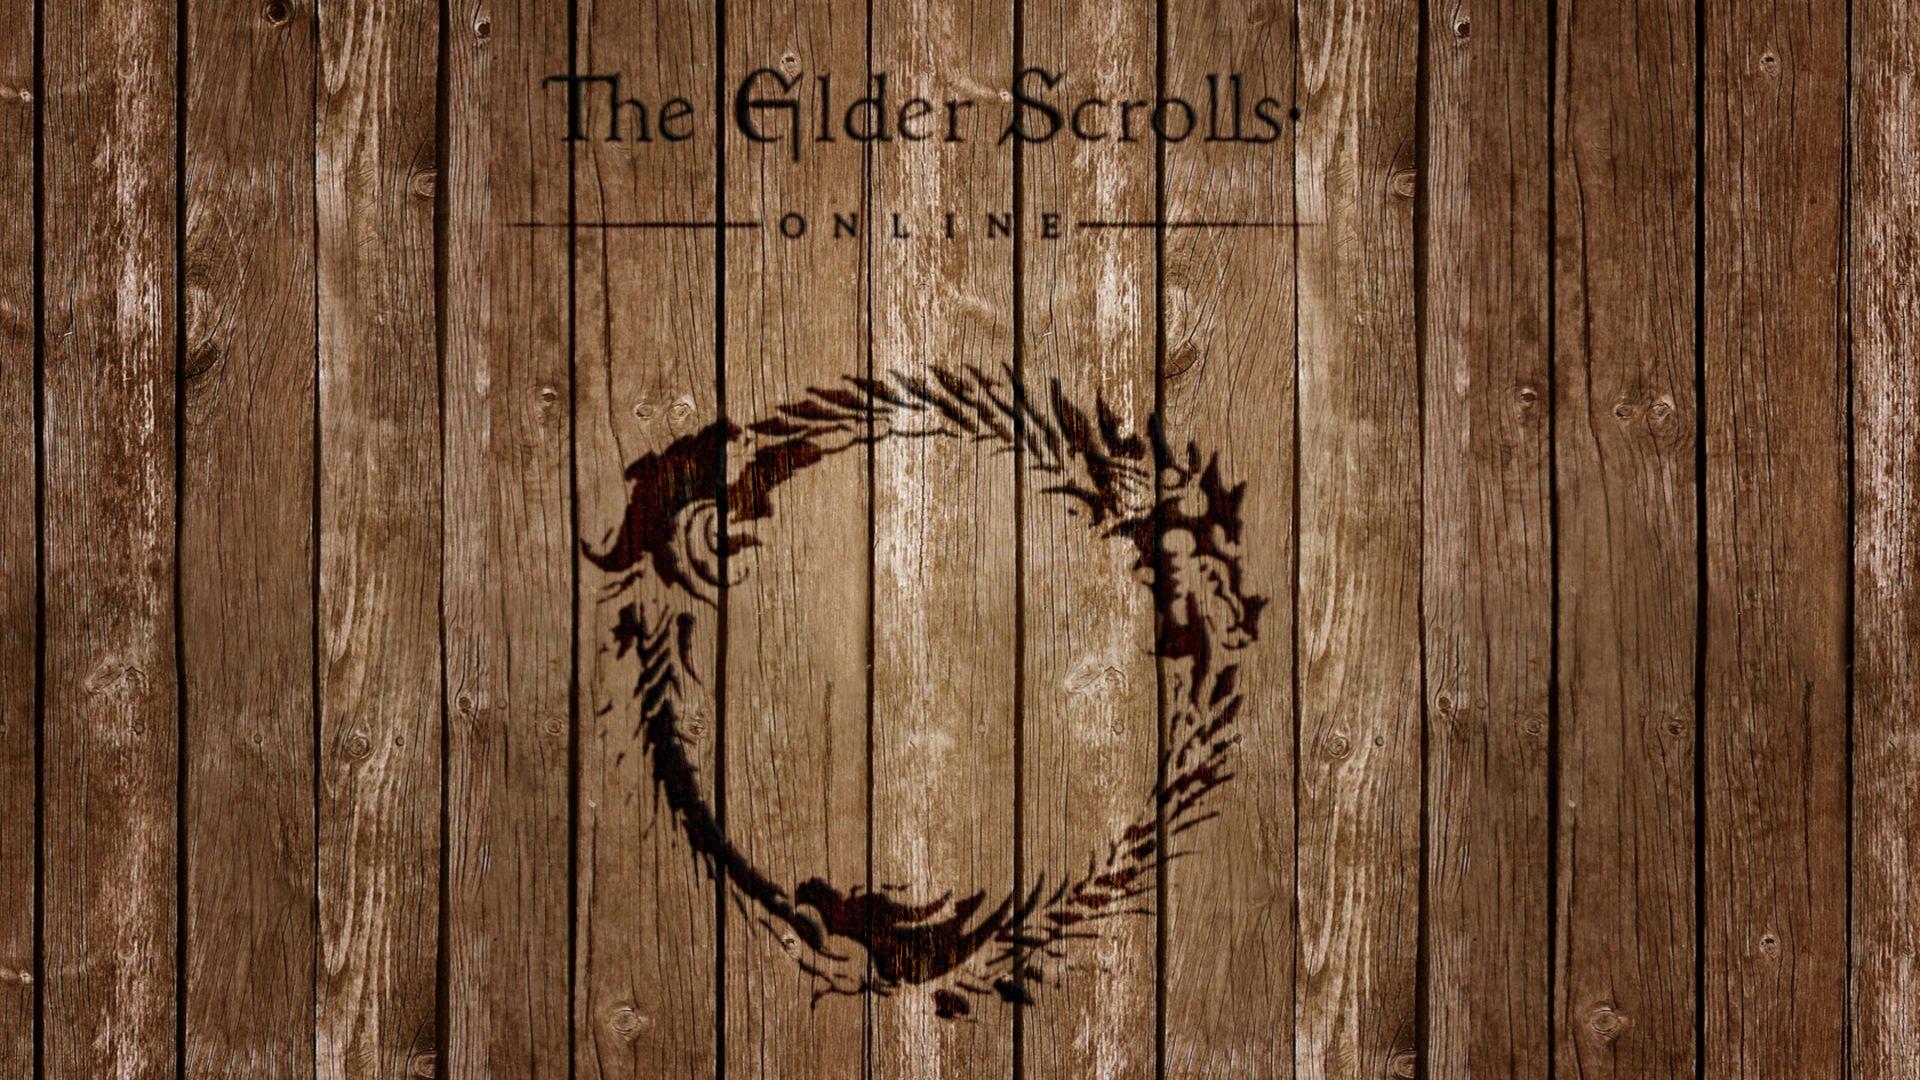 The Elder Scrolls Online Wallpaper, Picture, Image